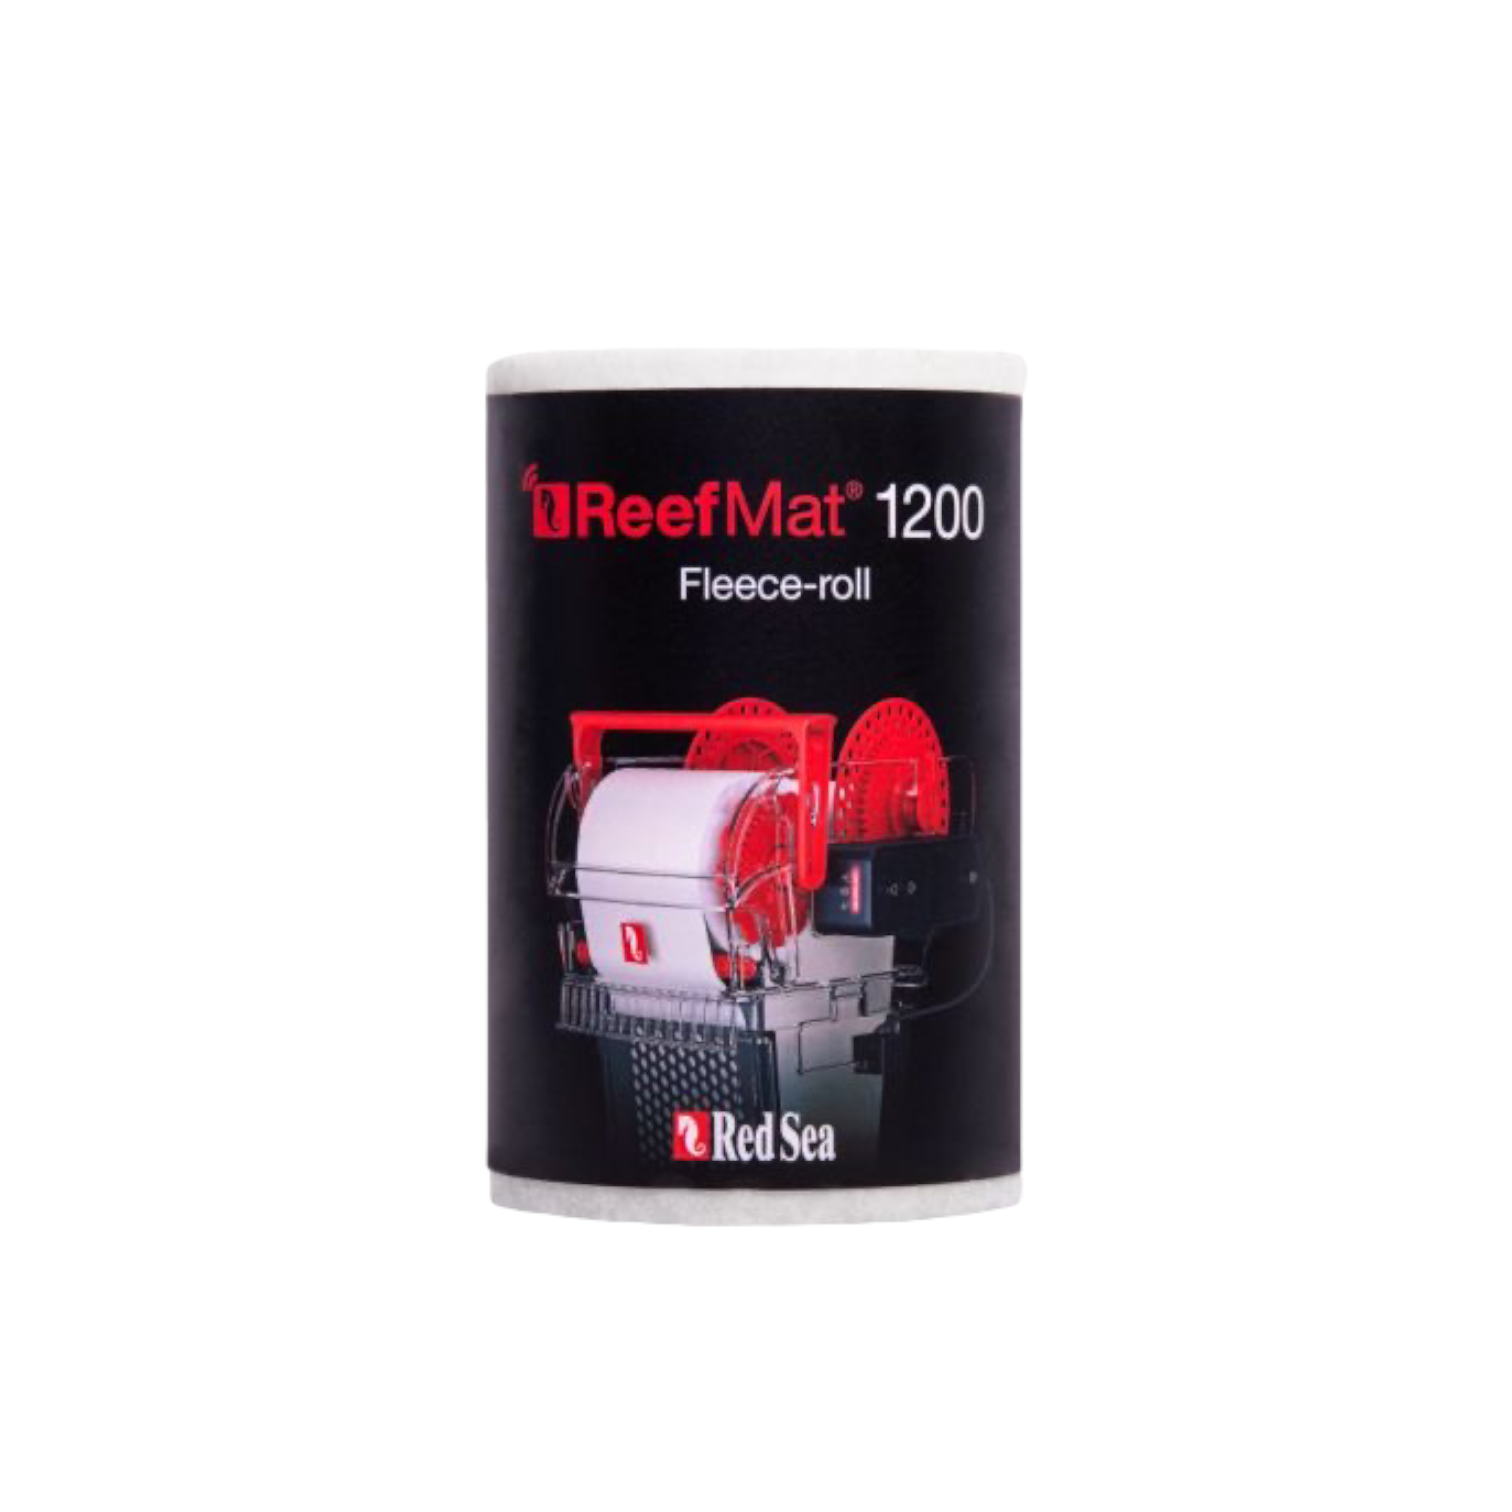 Red Sea ReefMat® 1200 fleece-roll